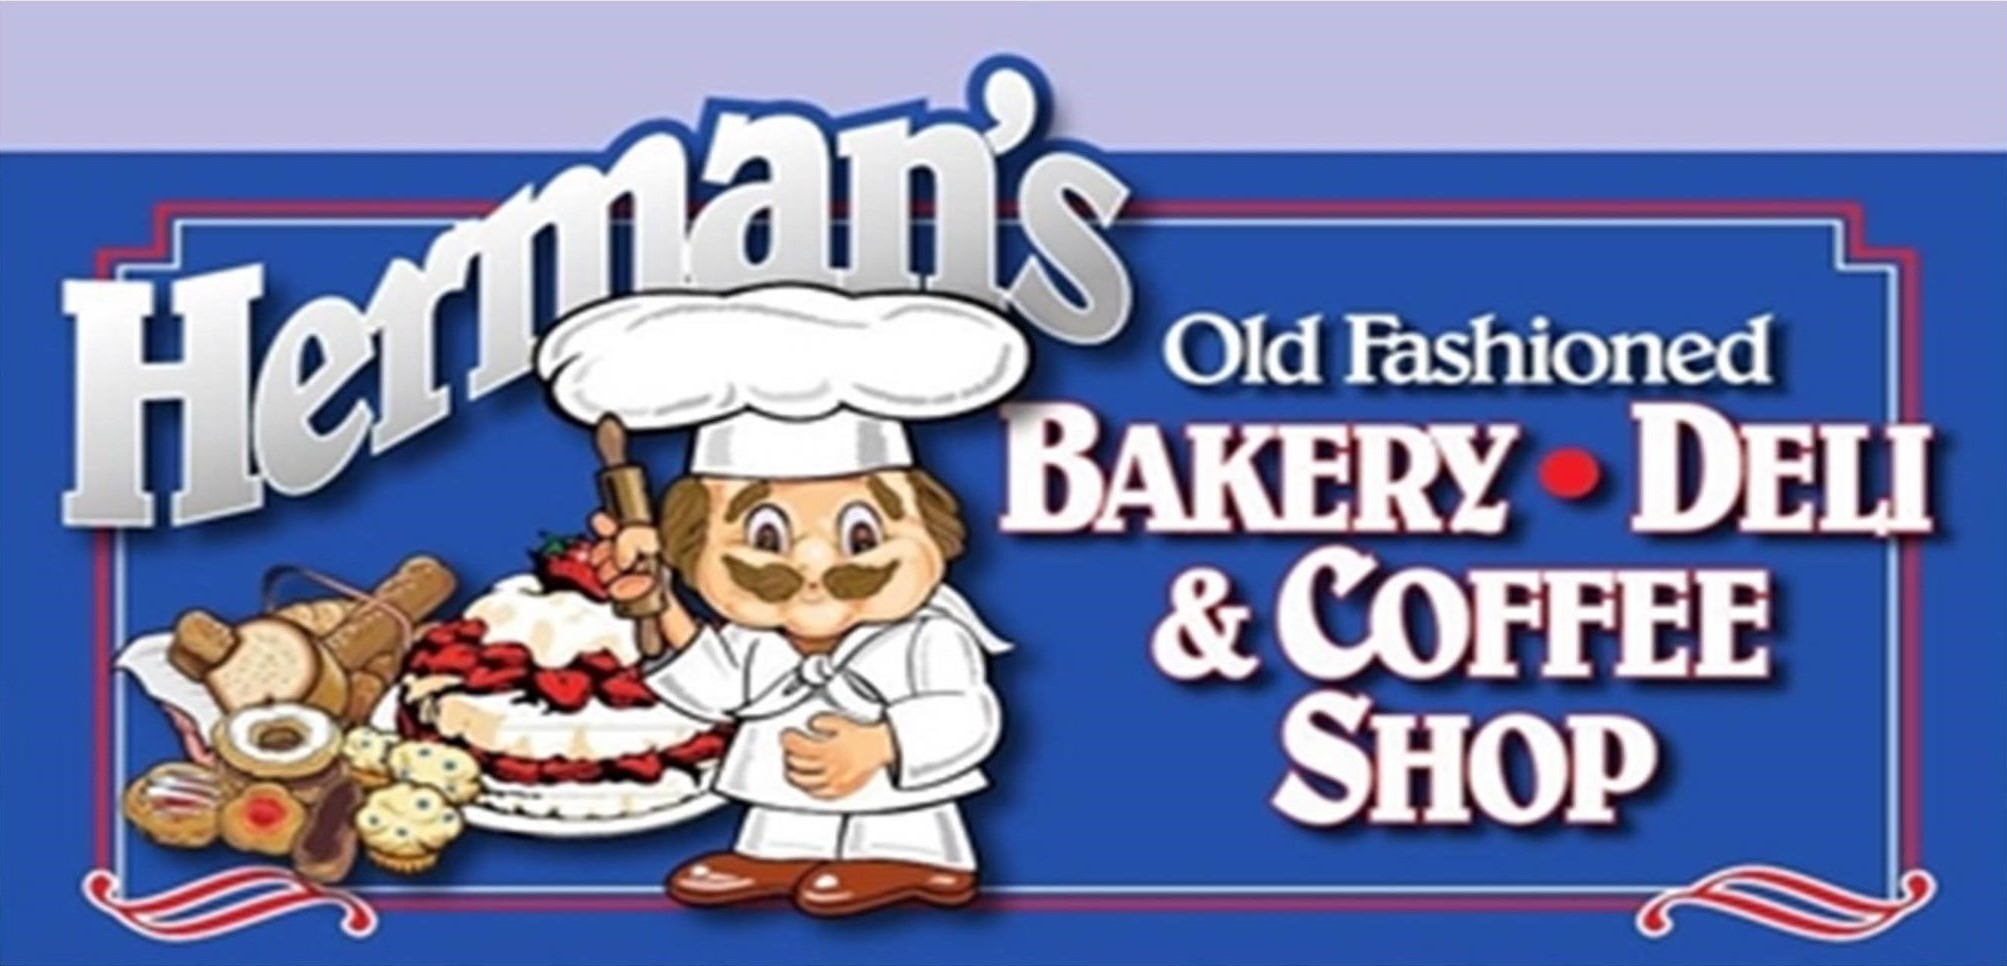 Herman’s Bakery